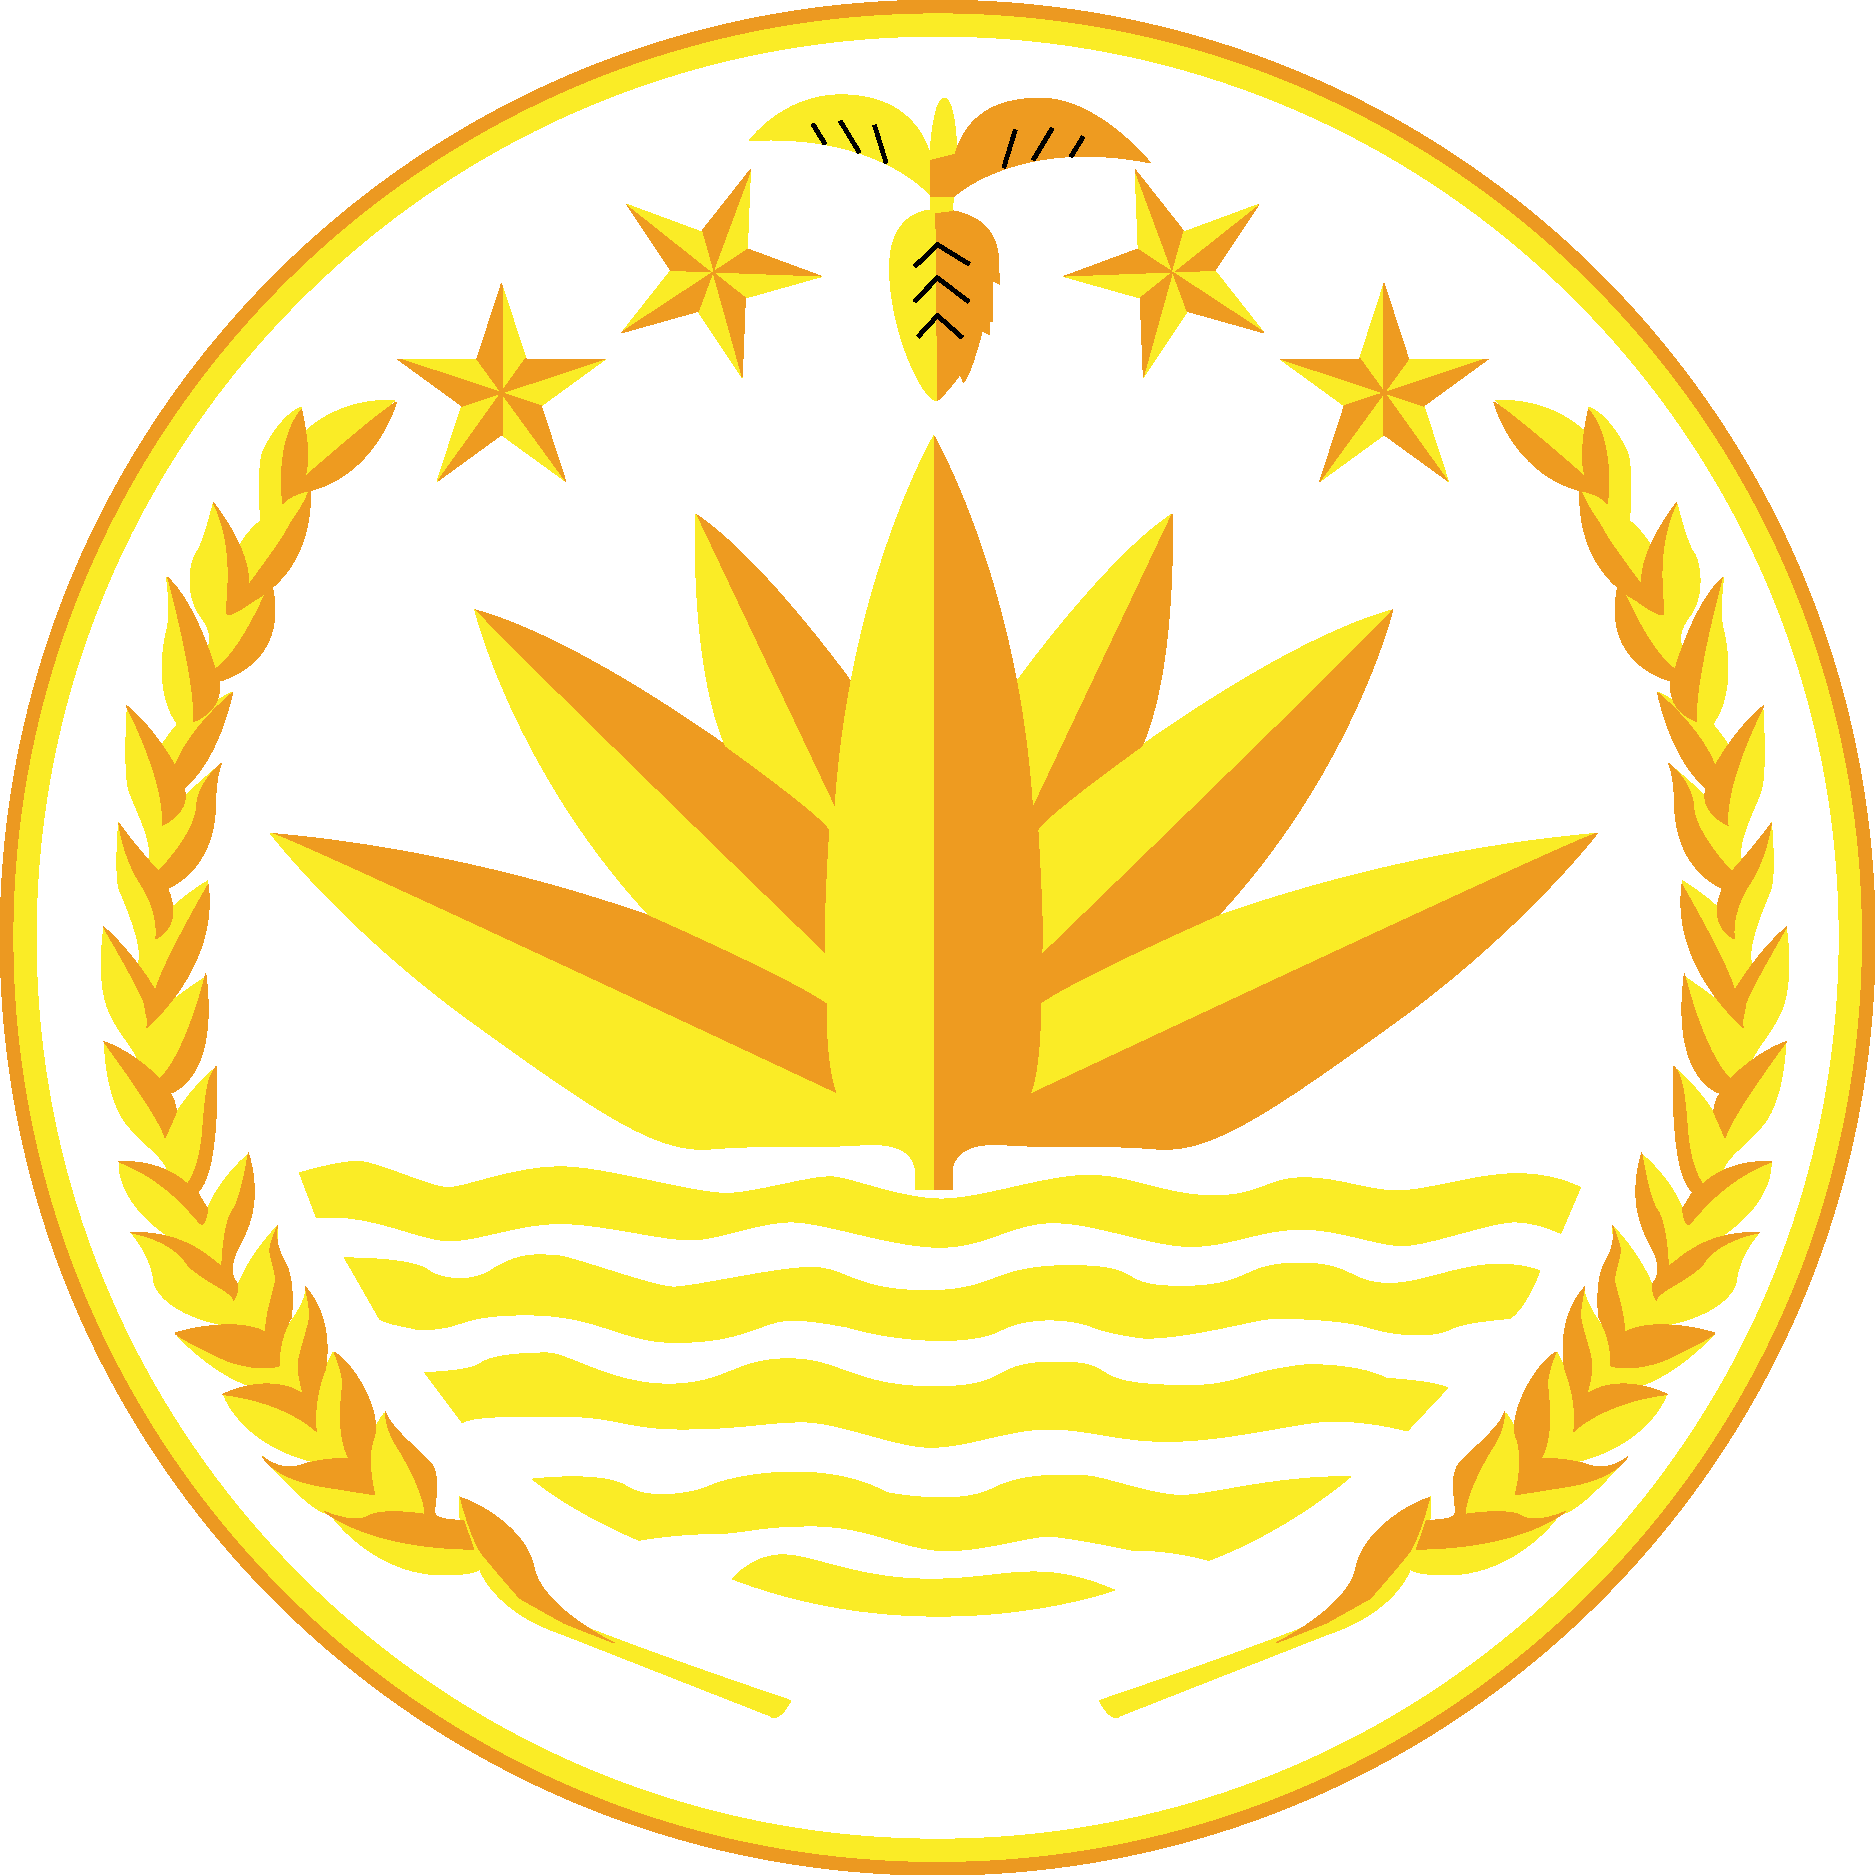 File:Emblem of India (gold).svg - Wikipedia